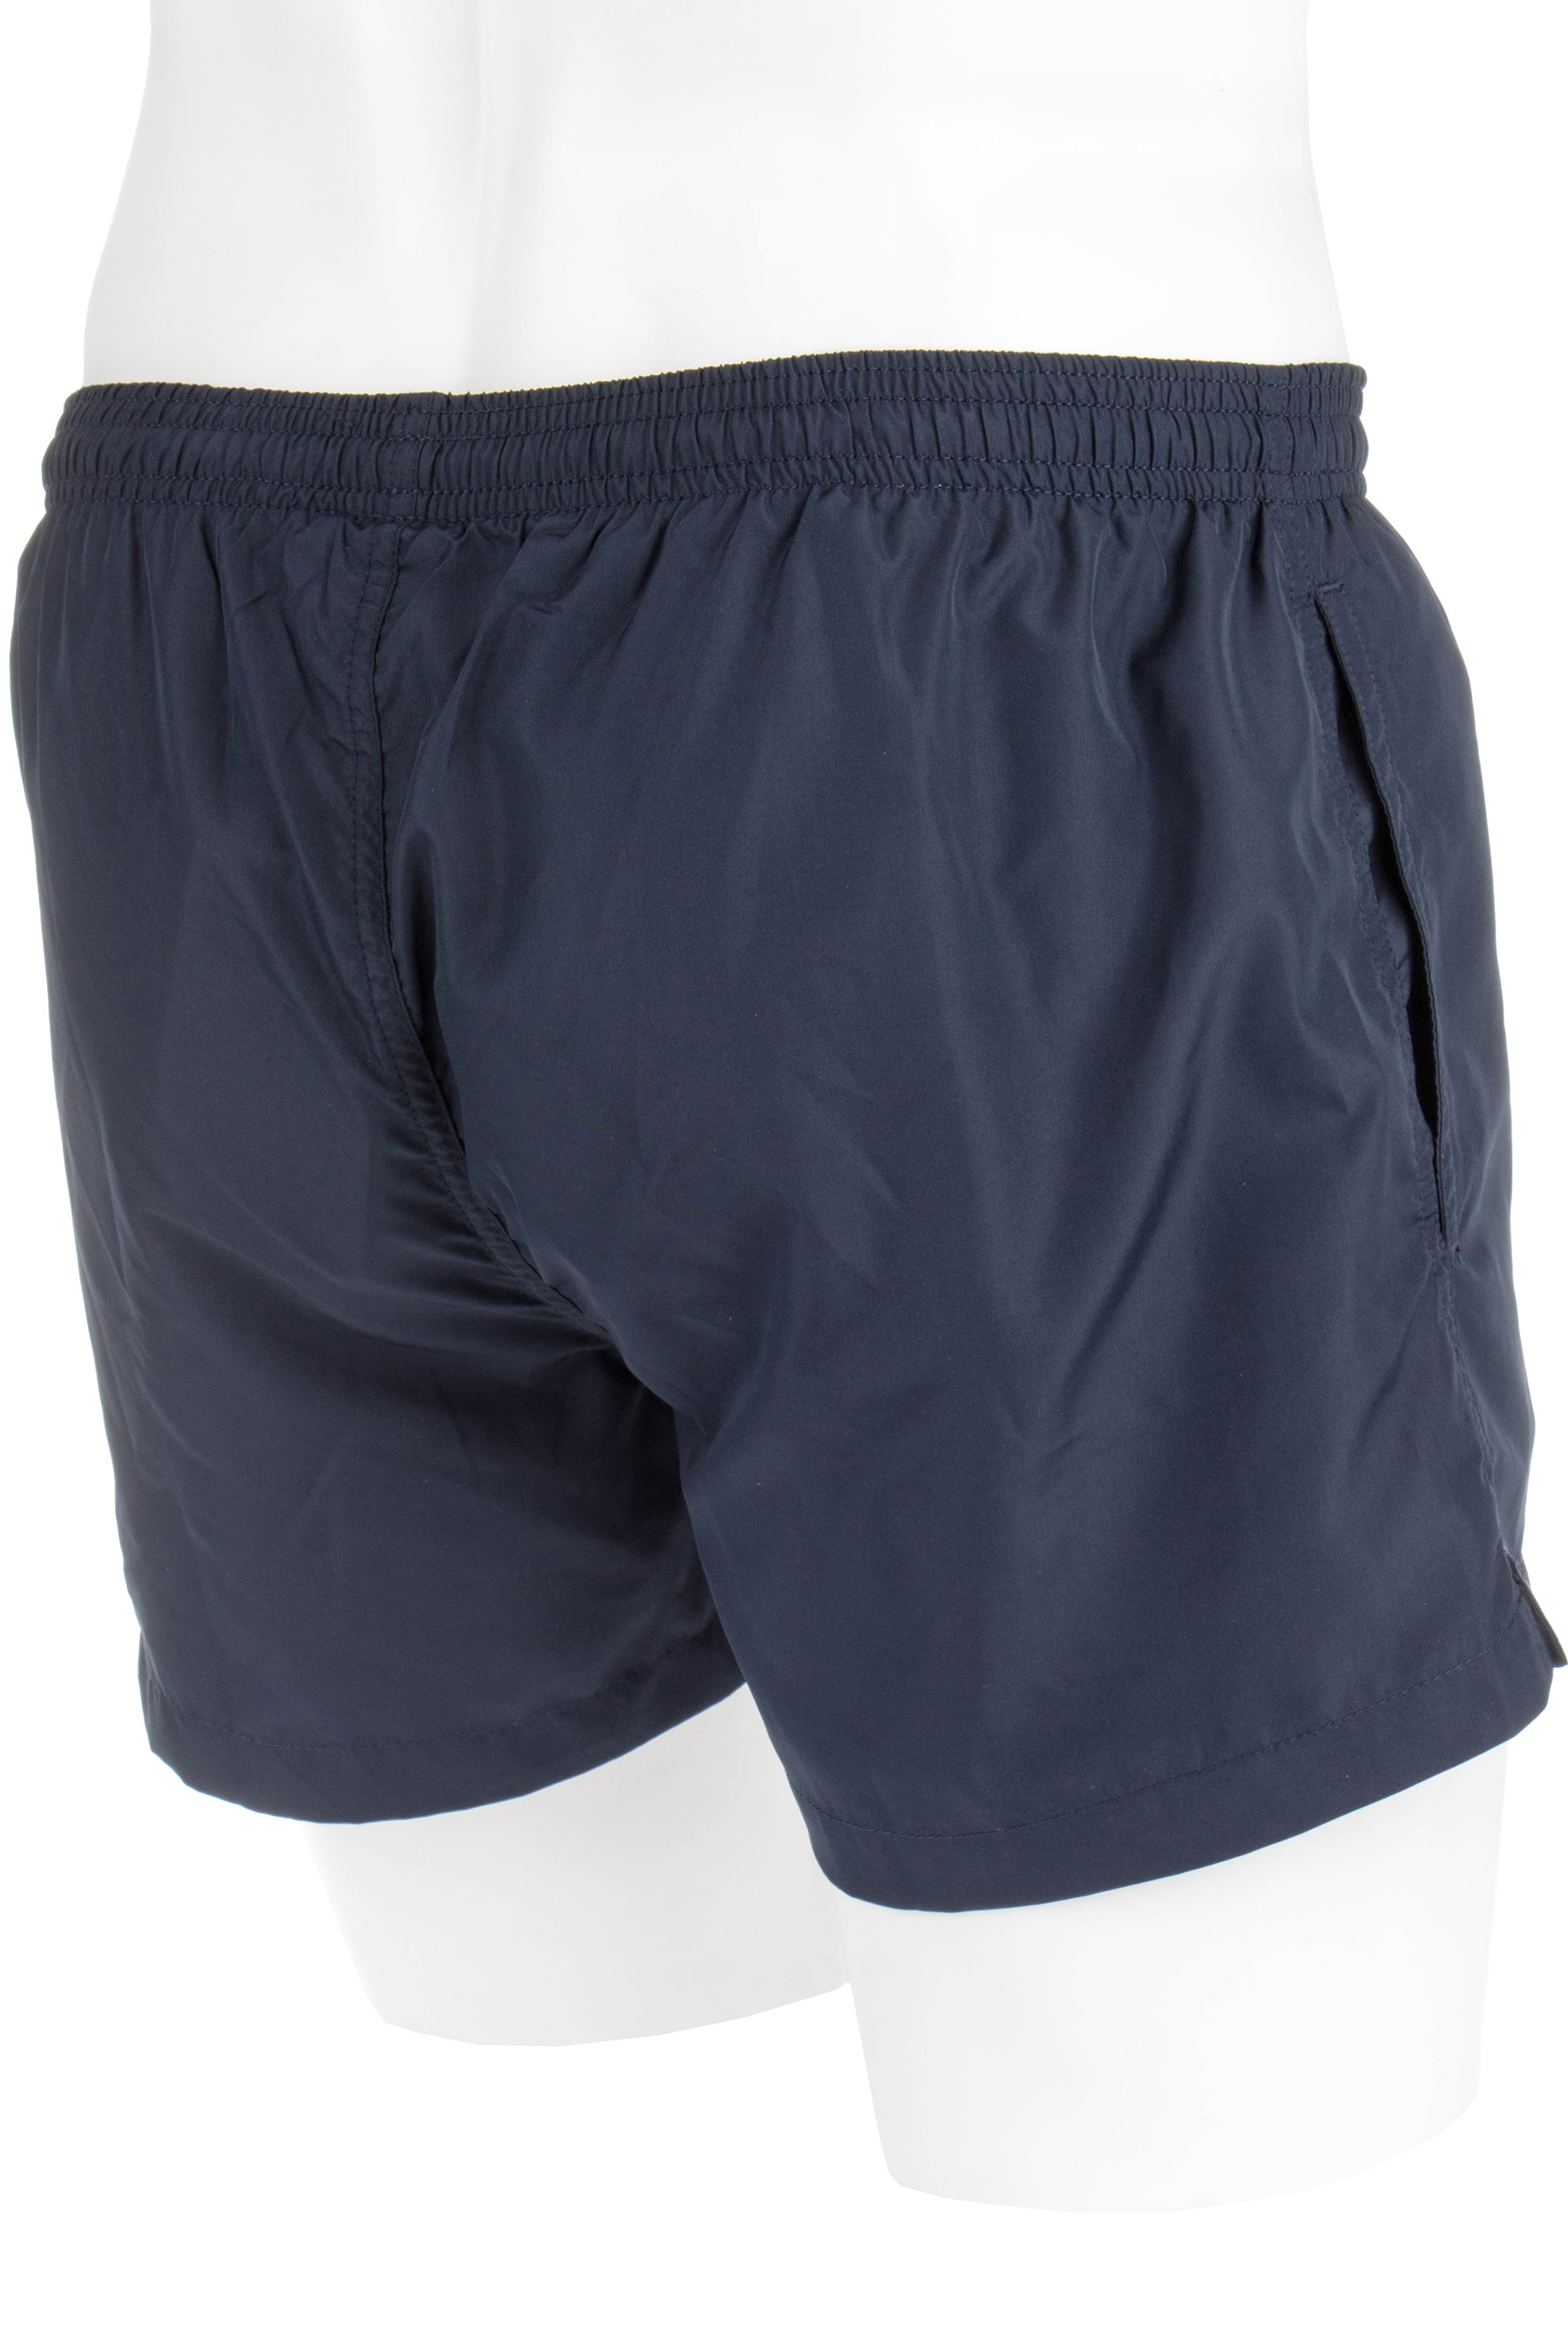 RON DORFF Swim Shorts Eyelet Edition | Swimwear | Clothing | Men ...